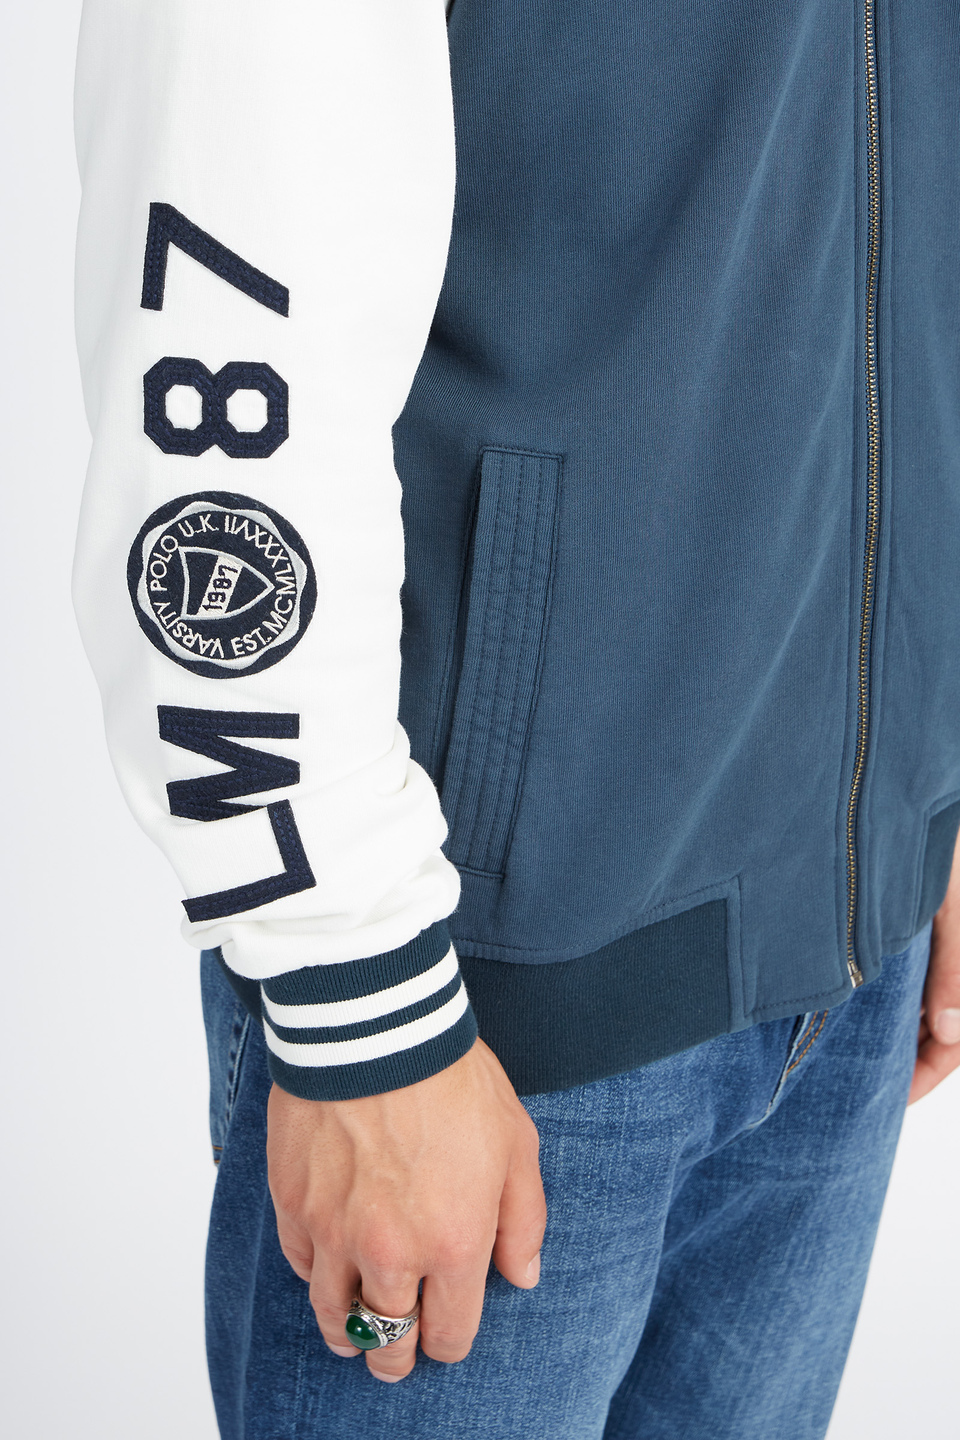 Polo Academy men's full-zip crewneck sweatshirt in color block with large logo - Vandan | La Martina - Official Online Shop